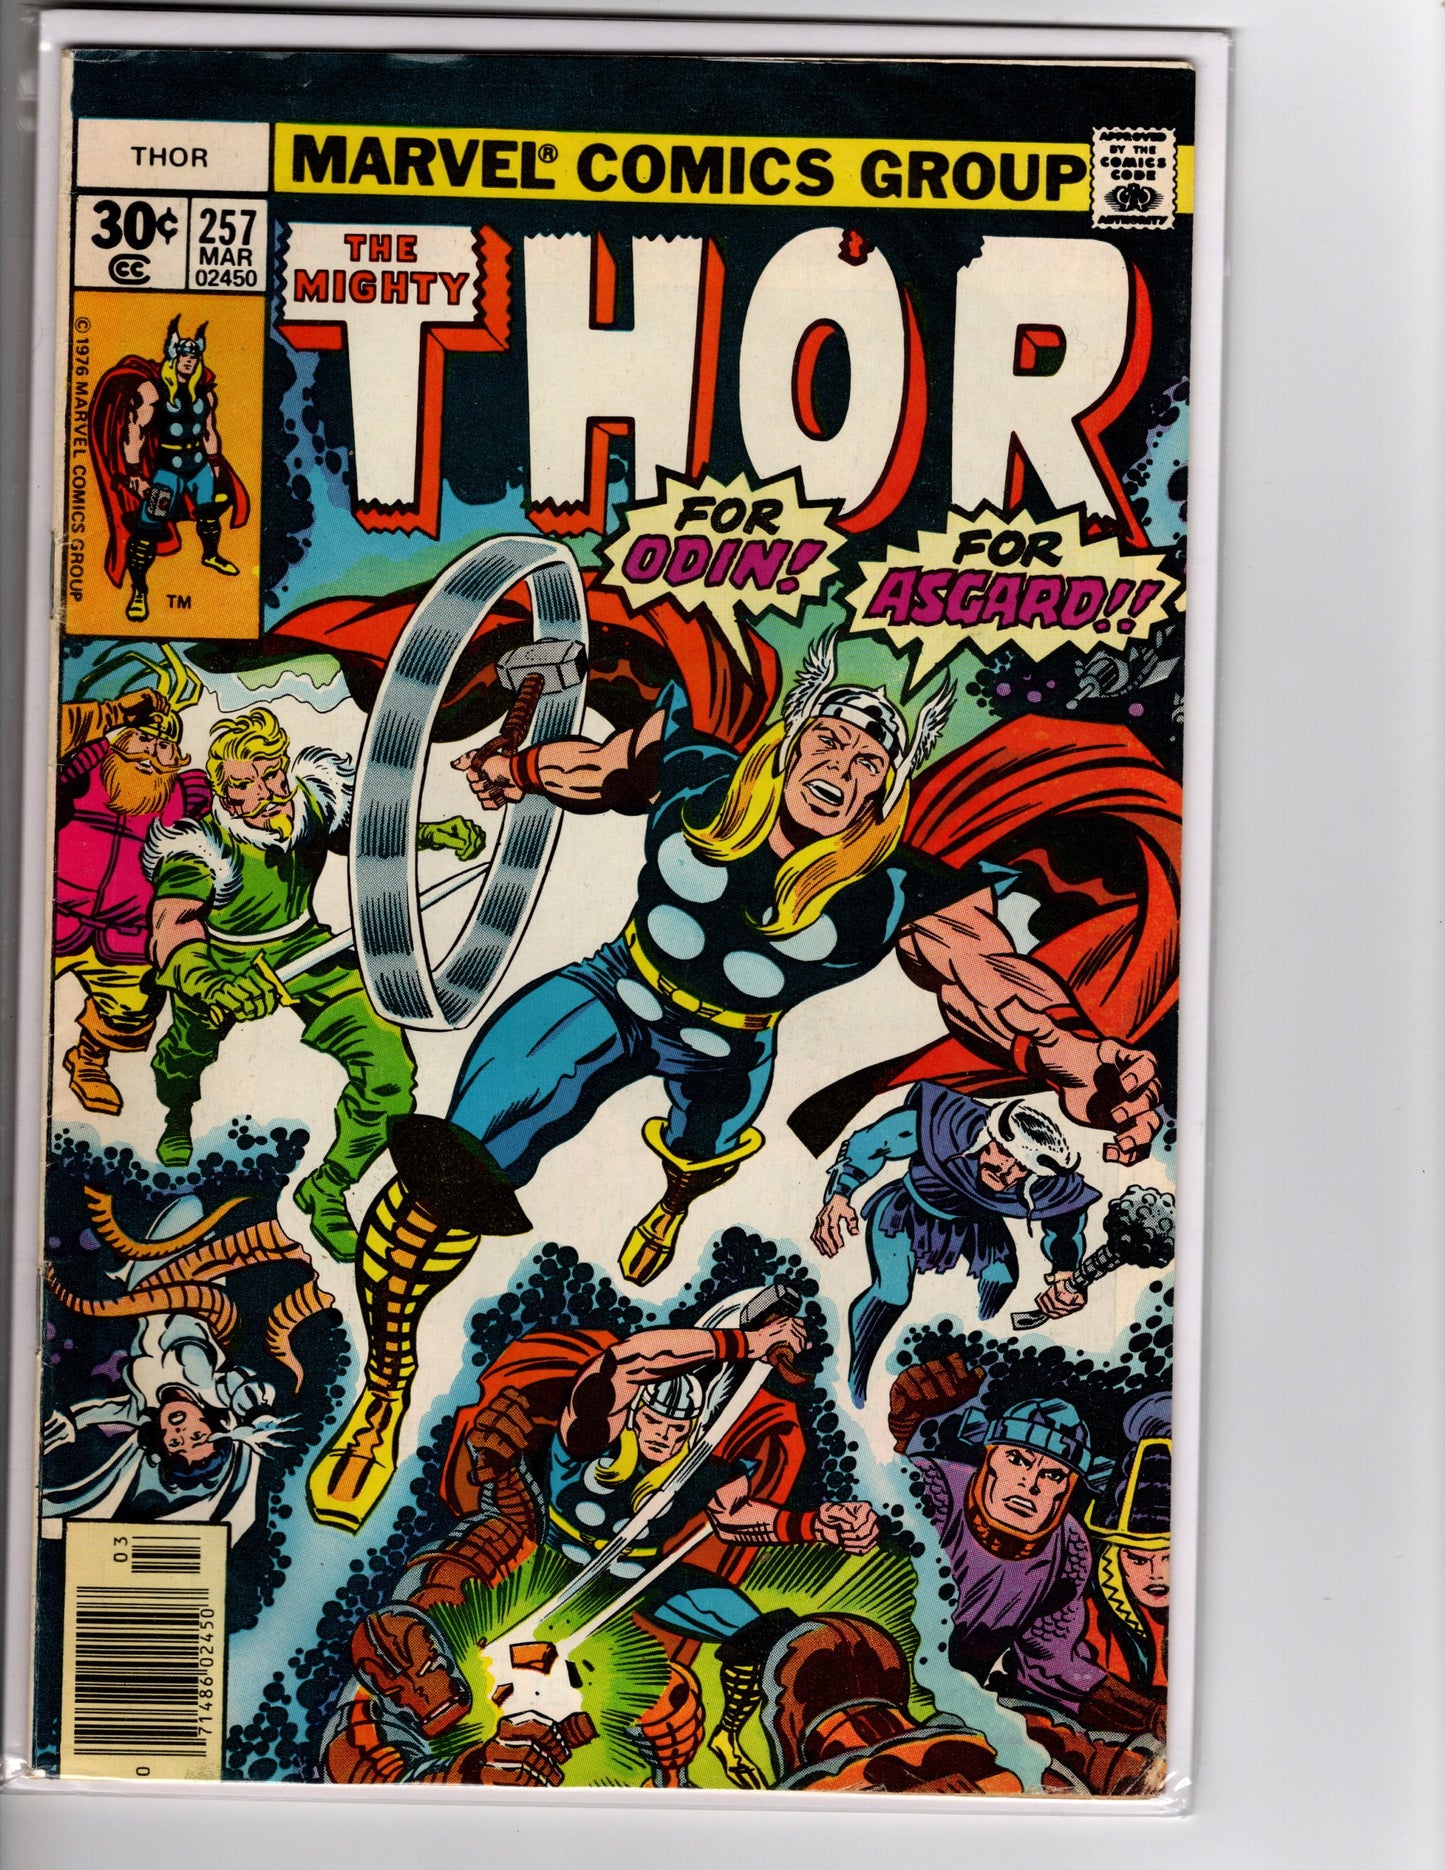 Thor #257